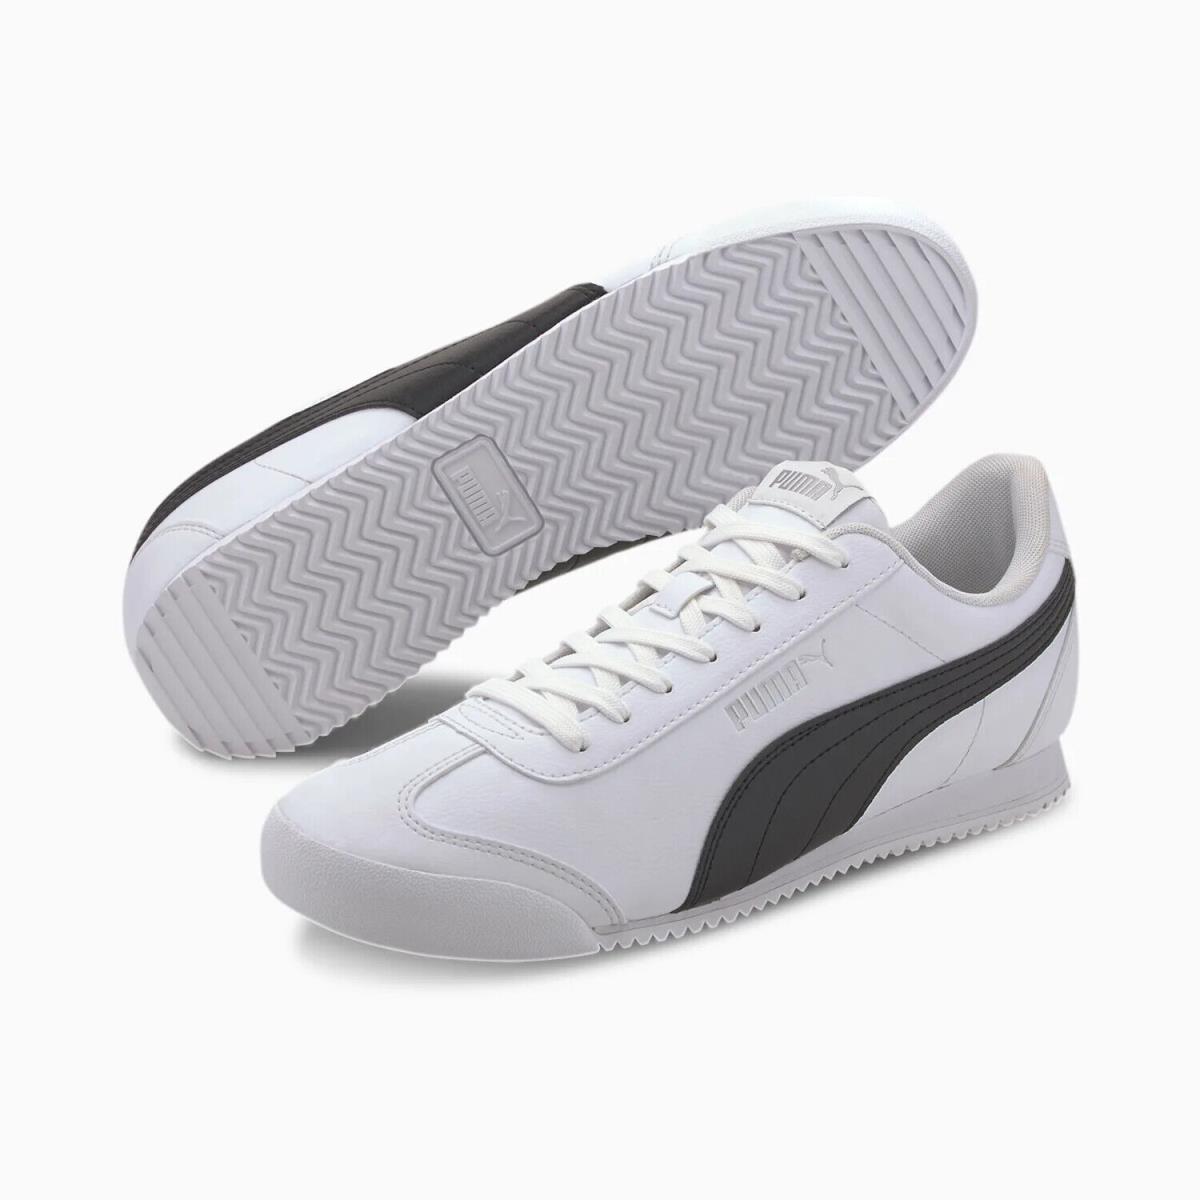 Puma Men`s Turino SL Sneakers White/black Size: 12 M US - White/Black